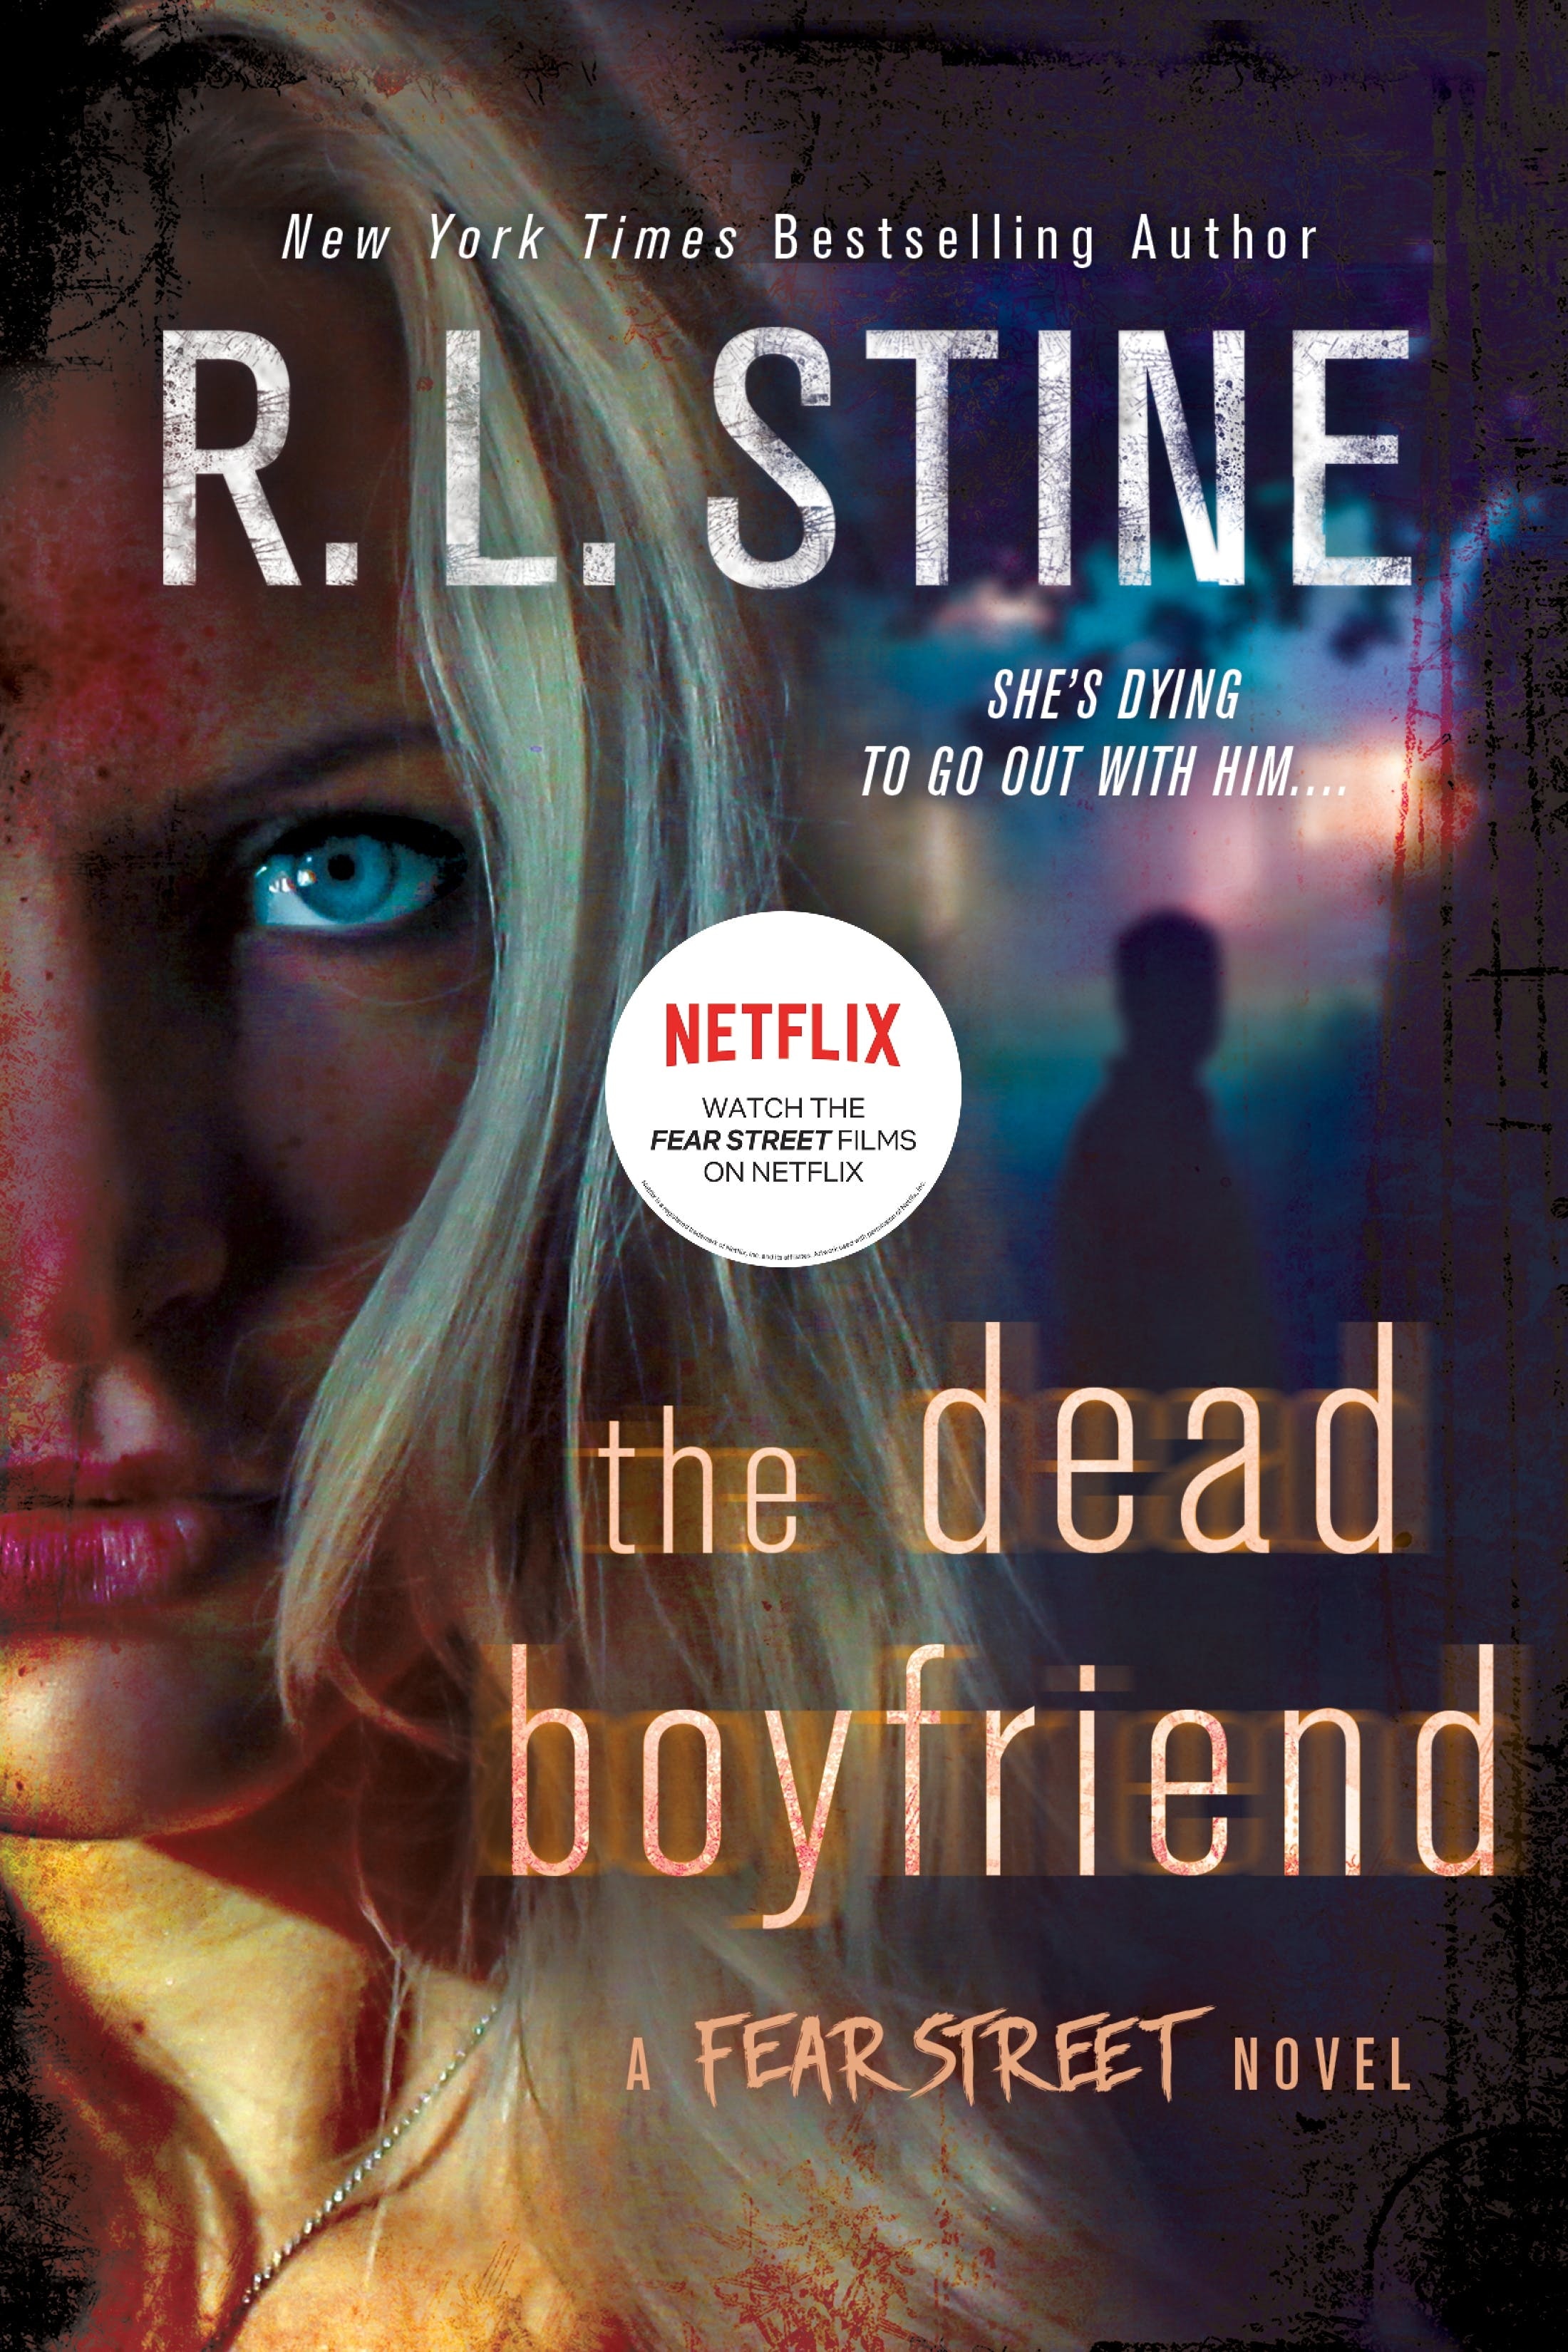 Book “The Dead Boyfriend” by R. L. Stine — September 27, 2016